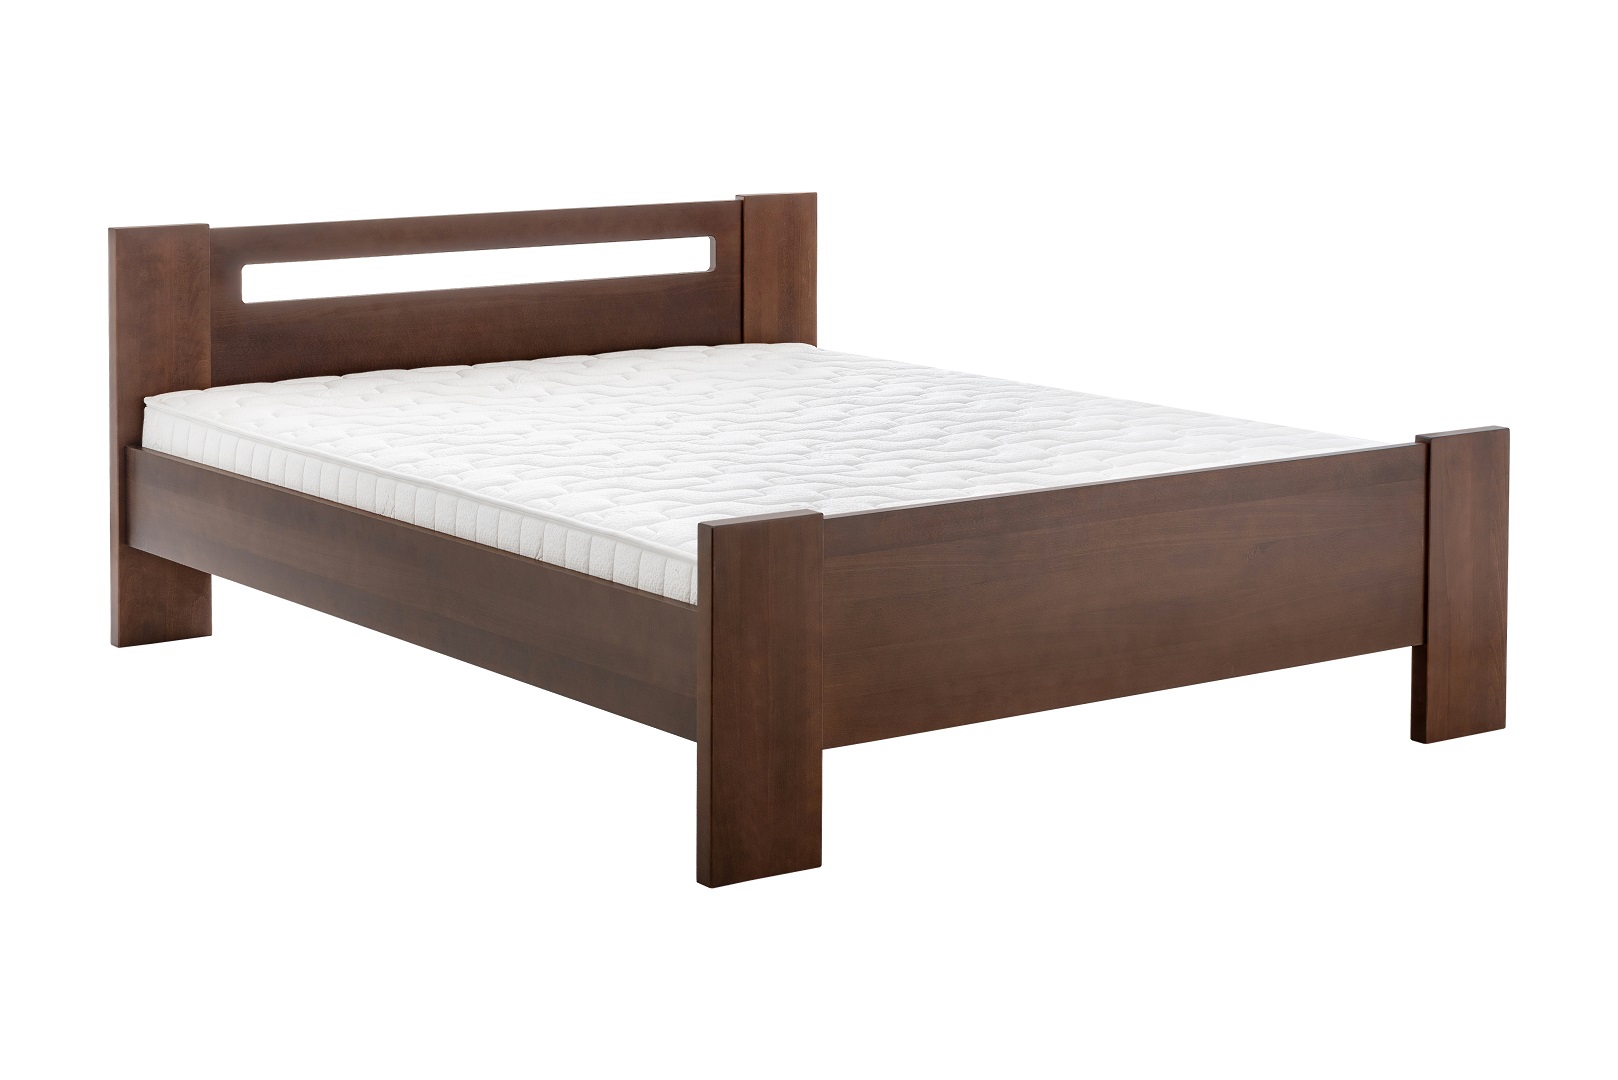 Łóżko drewniane BUK VI LEKTO